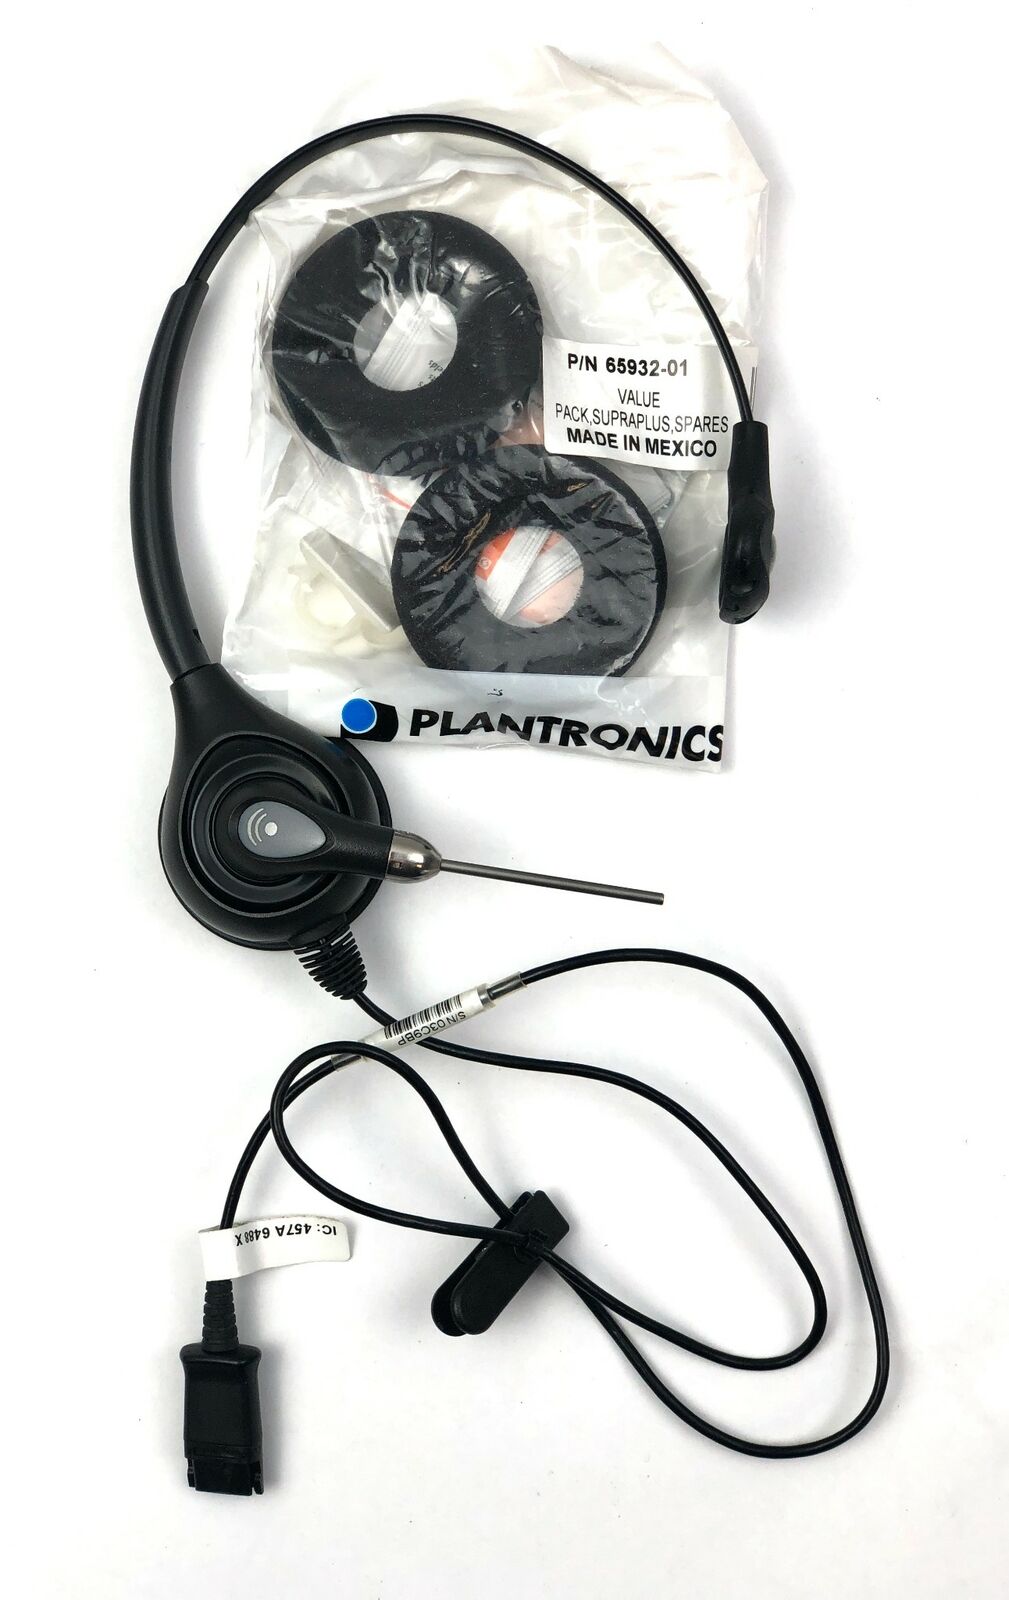 Plantronics Wideband Headset Black SupraPlus with Value Pack 65932-01